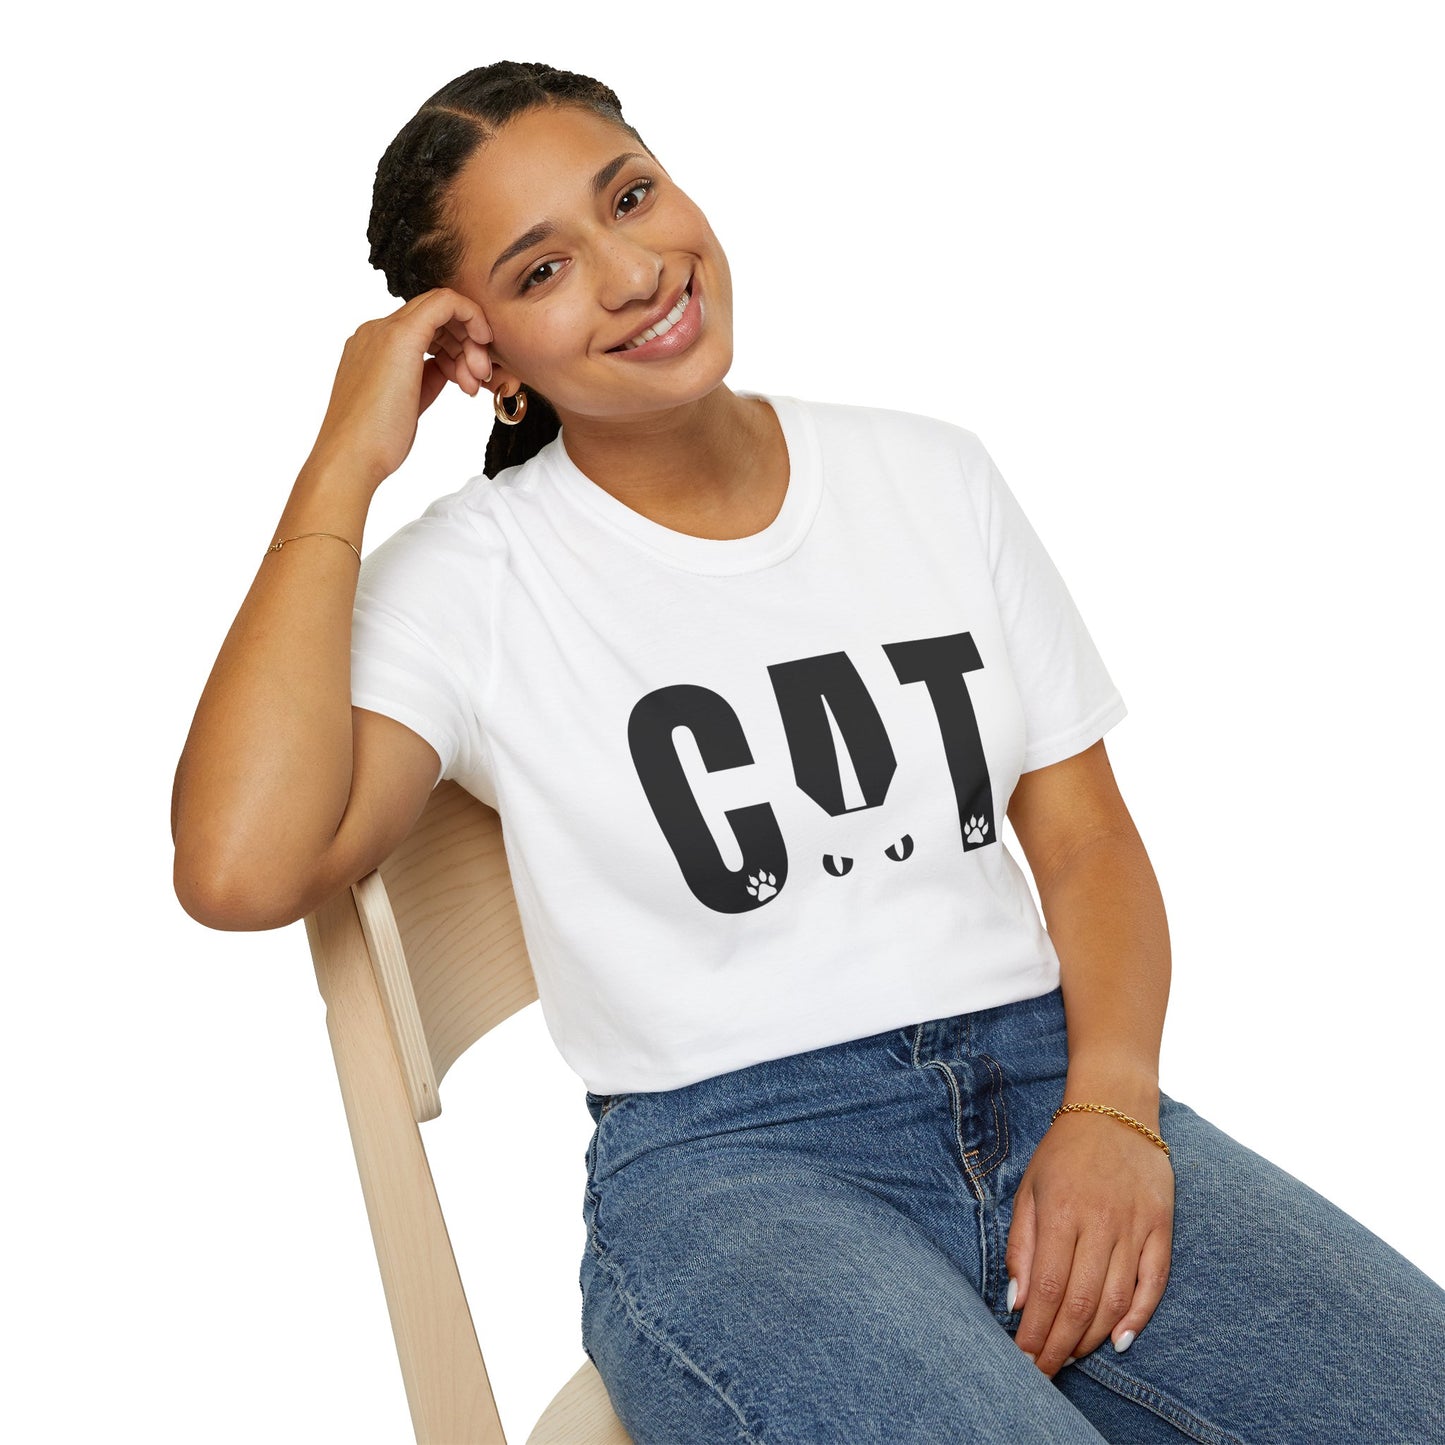 Cat Shirt - Unisex - Softstyle T-Shirt